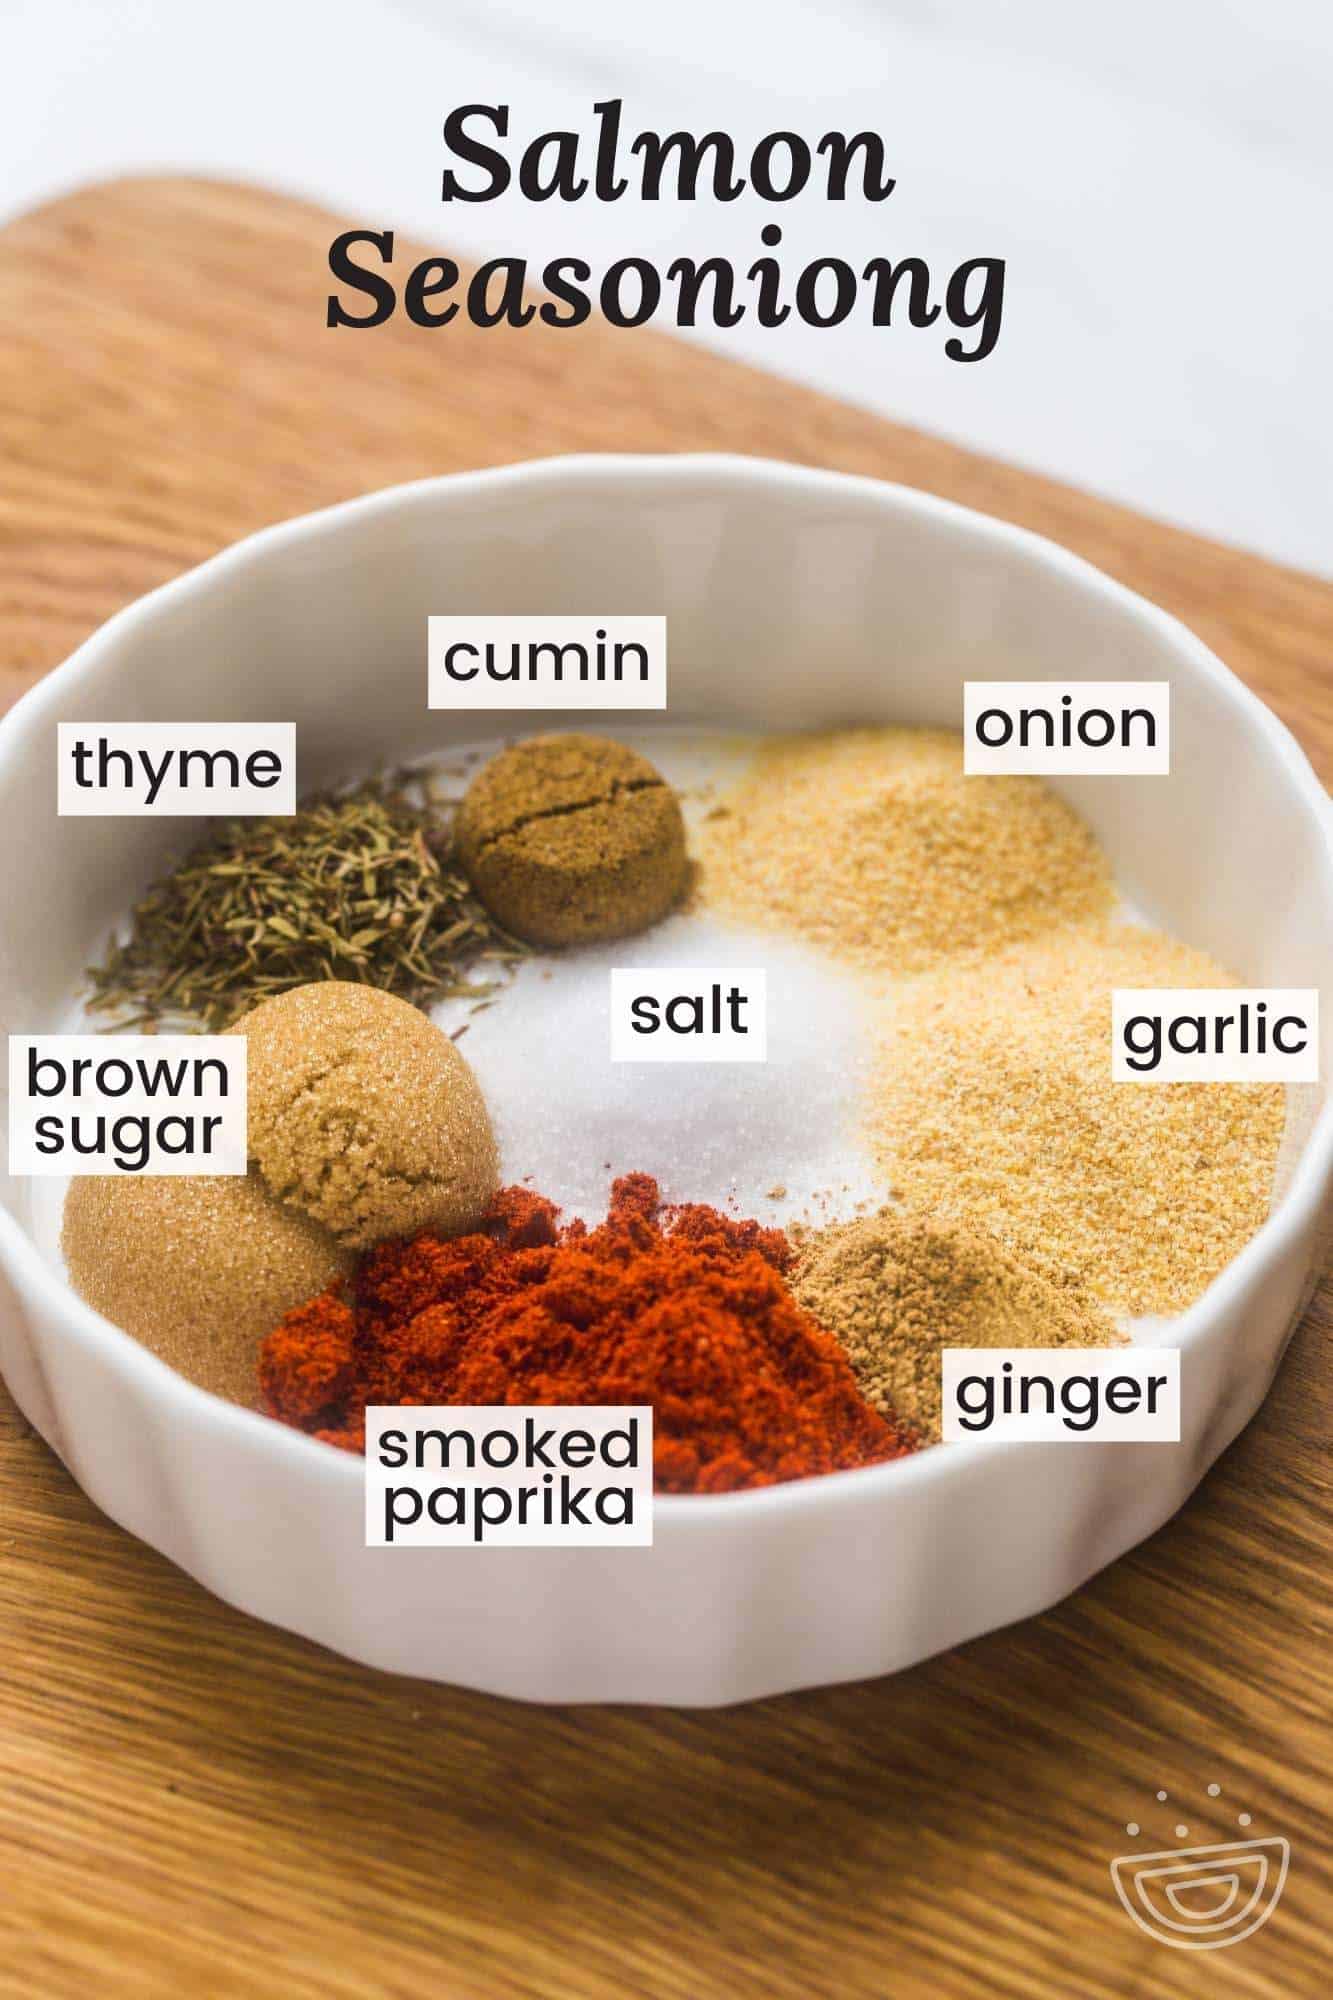 Ingredients needed for making salmon seasoning including cumin, smoked paprika, thyme, ginger, brown sugar, salt, onion, and garlic.